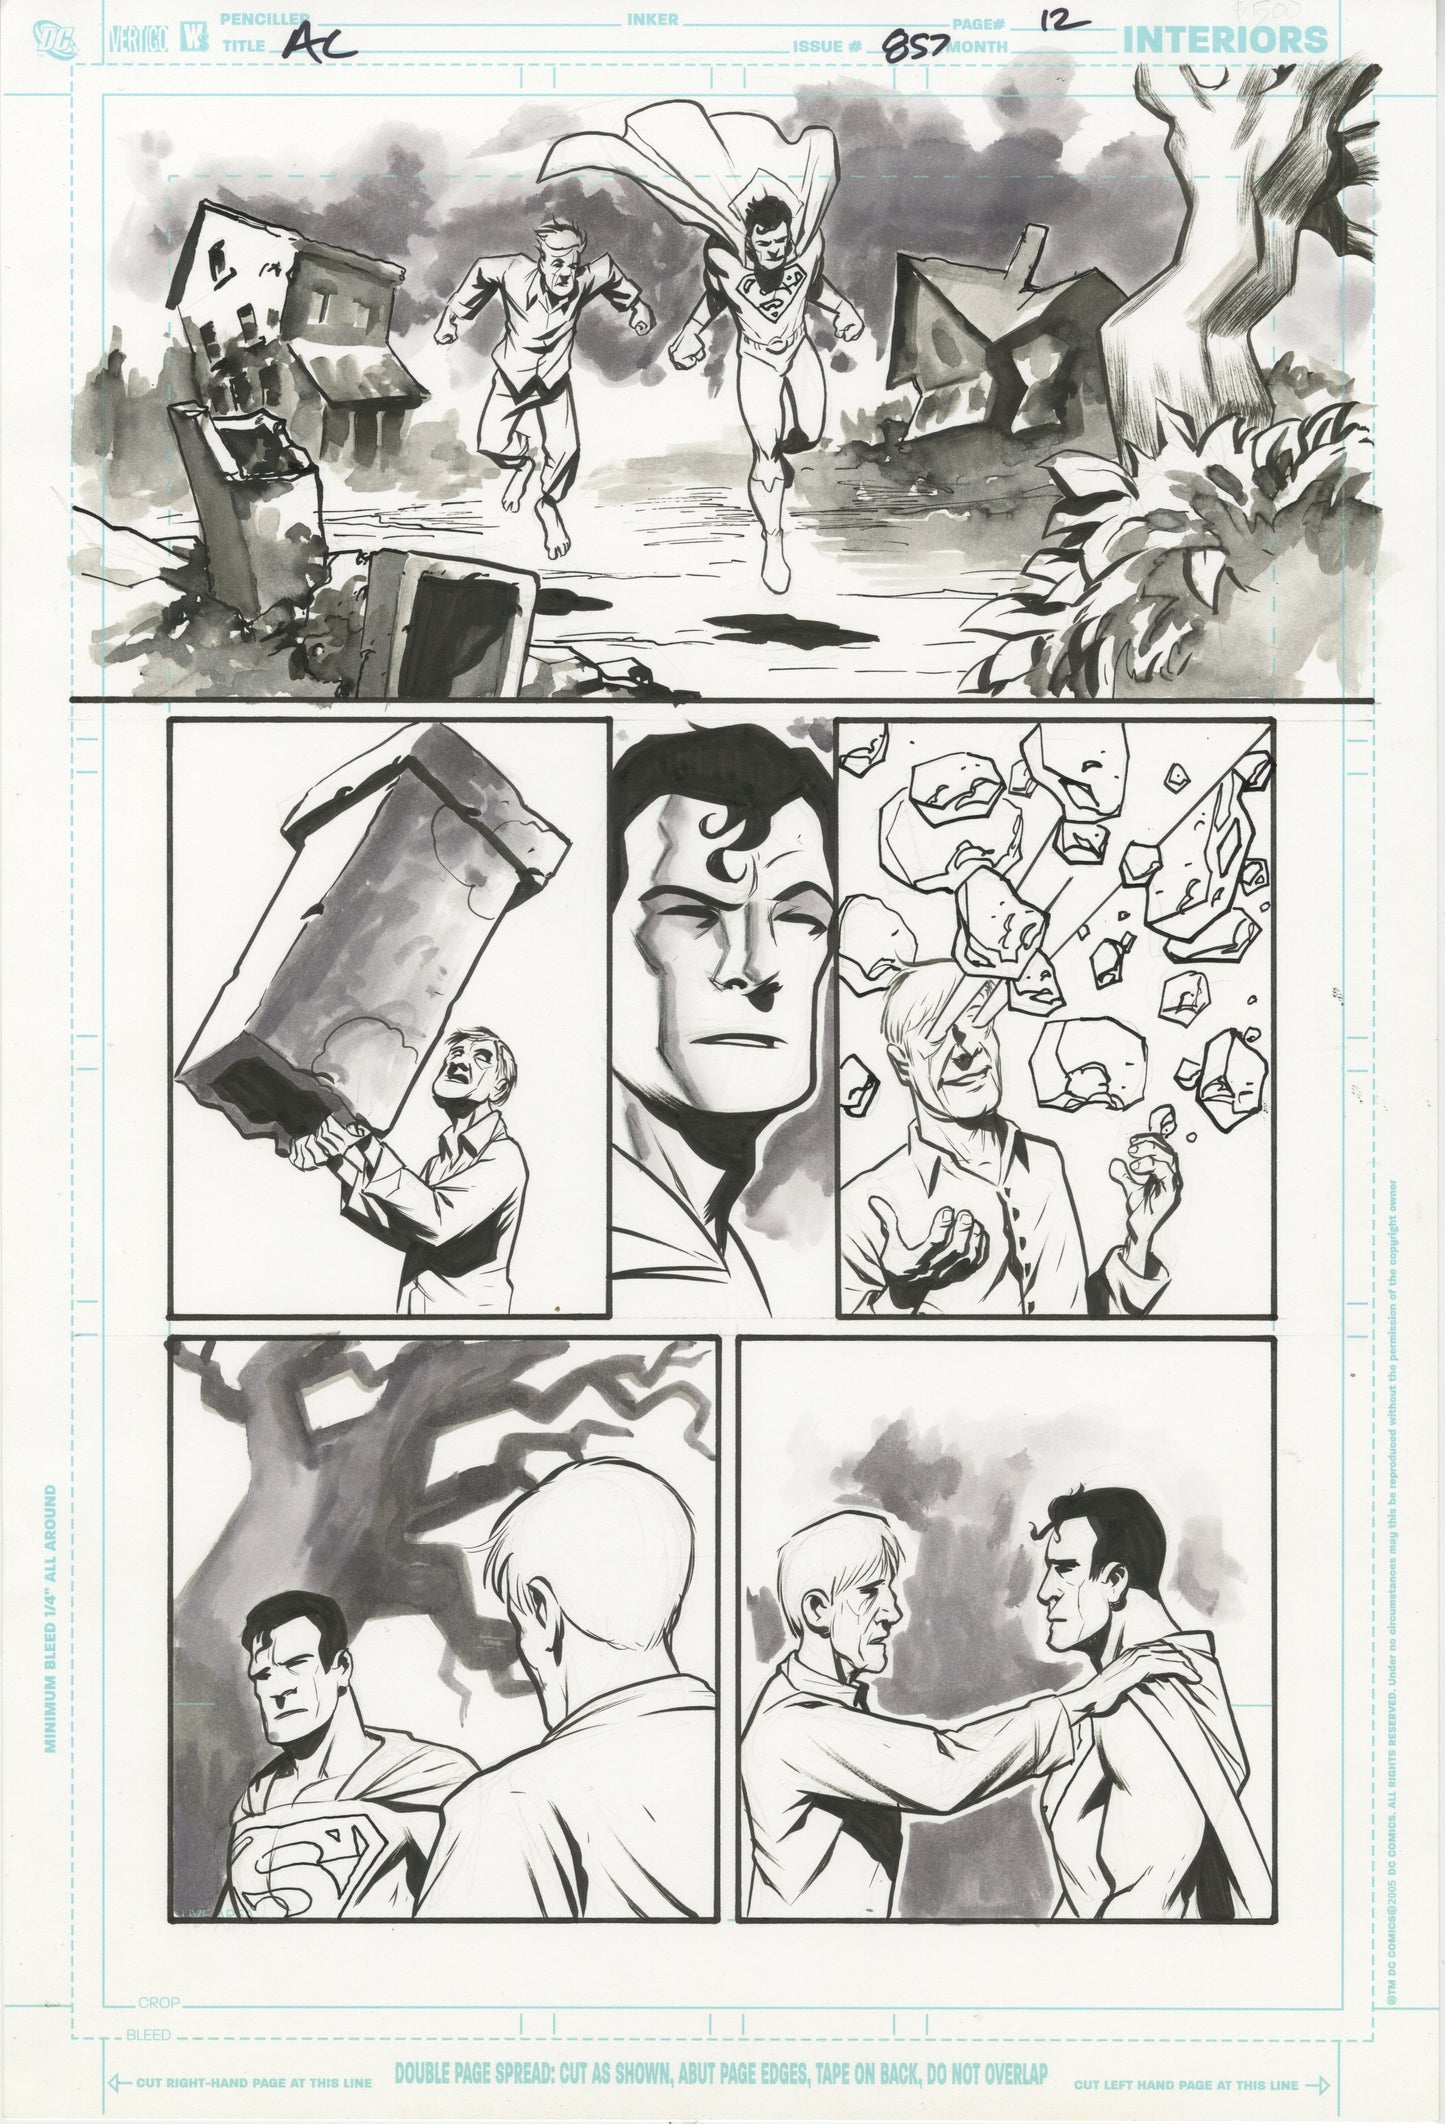 Action Comics #857, Page #12 (2007 DC, Superman: Escape From Bizarro World)